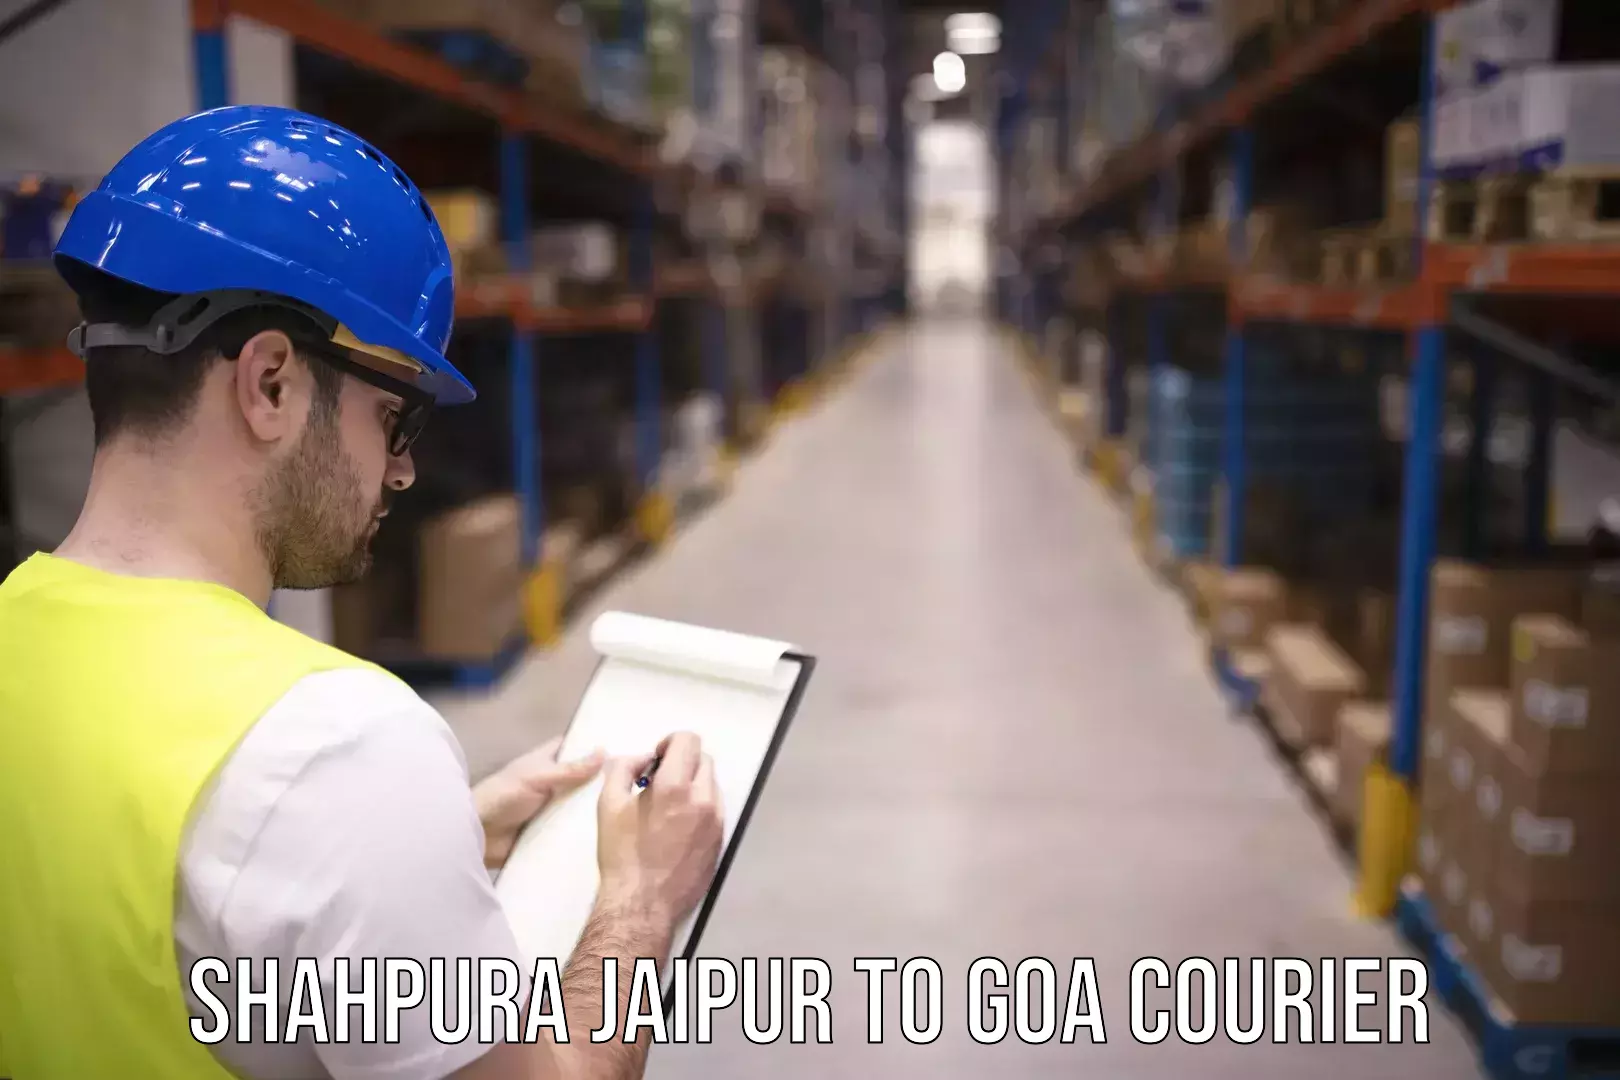 International courier networks Shahpura Jaipur to Goa